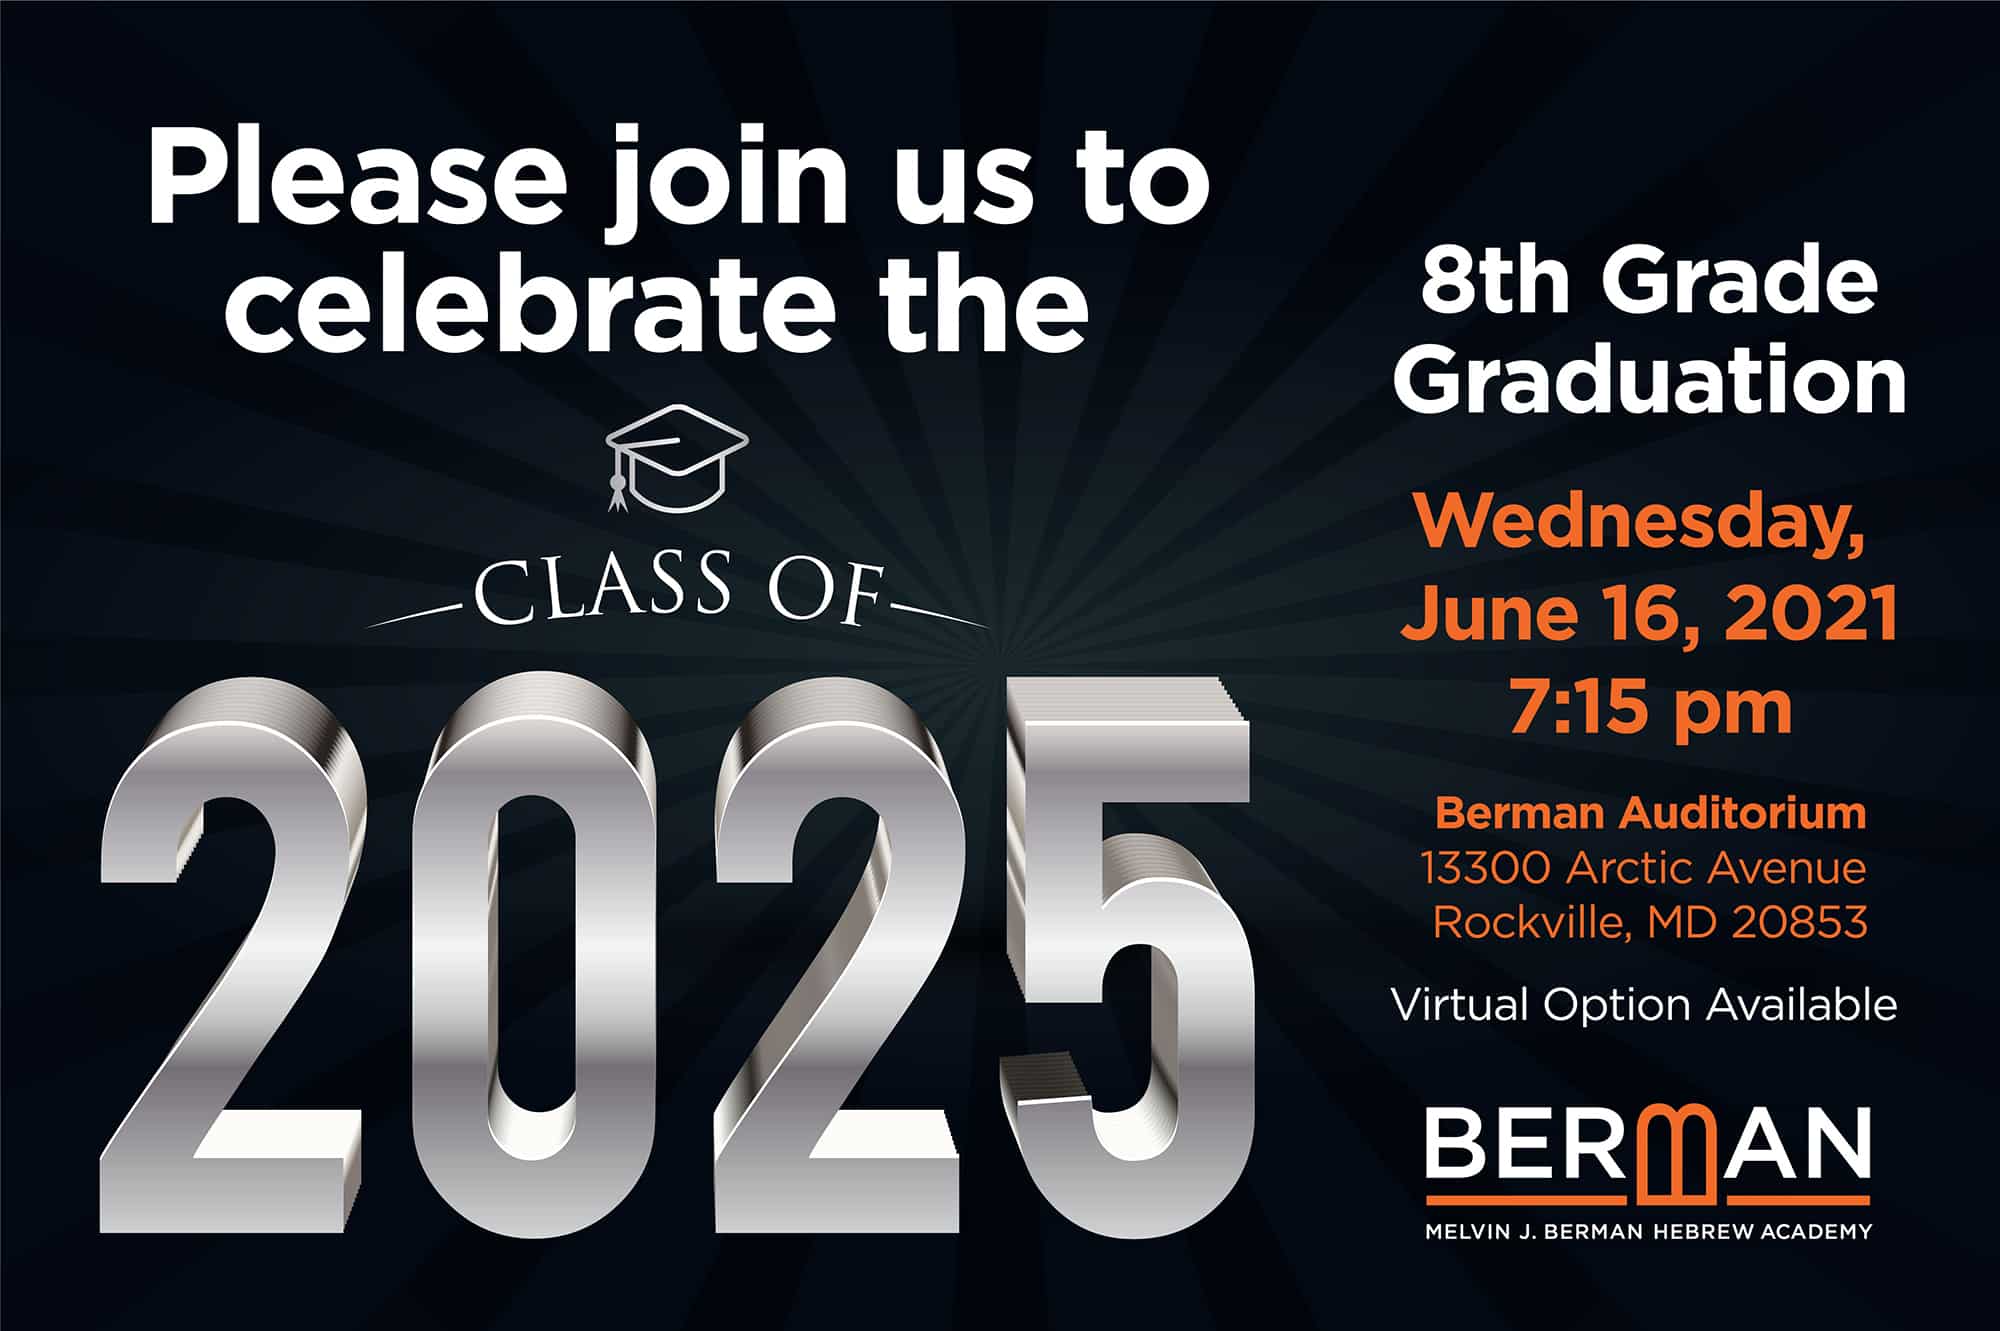 8th-grade-graduation-registration-berman-hebrew-academy